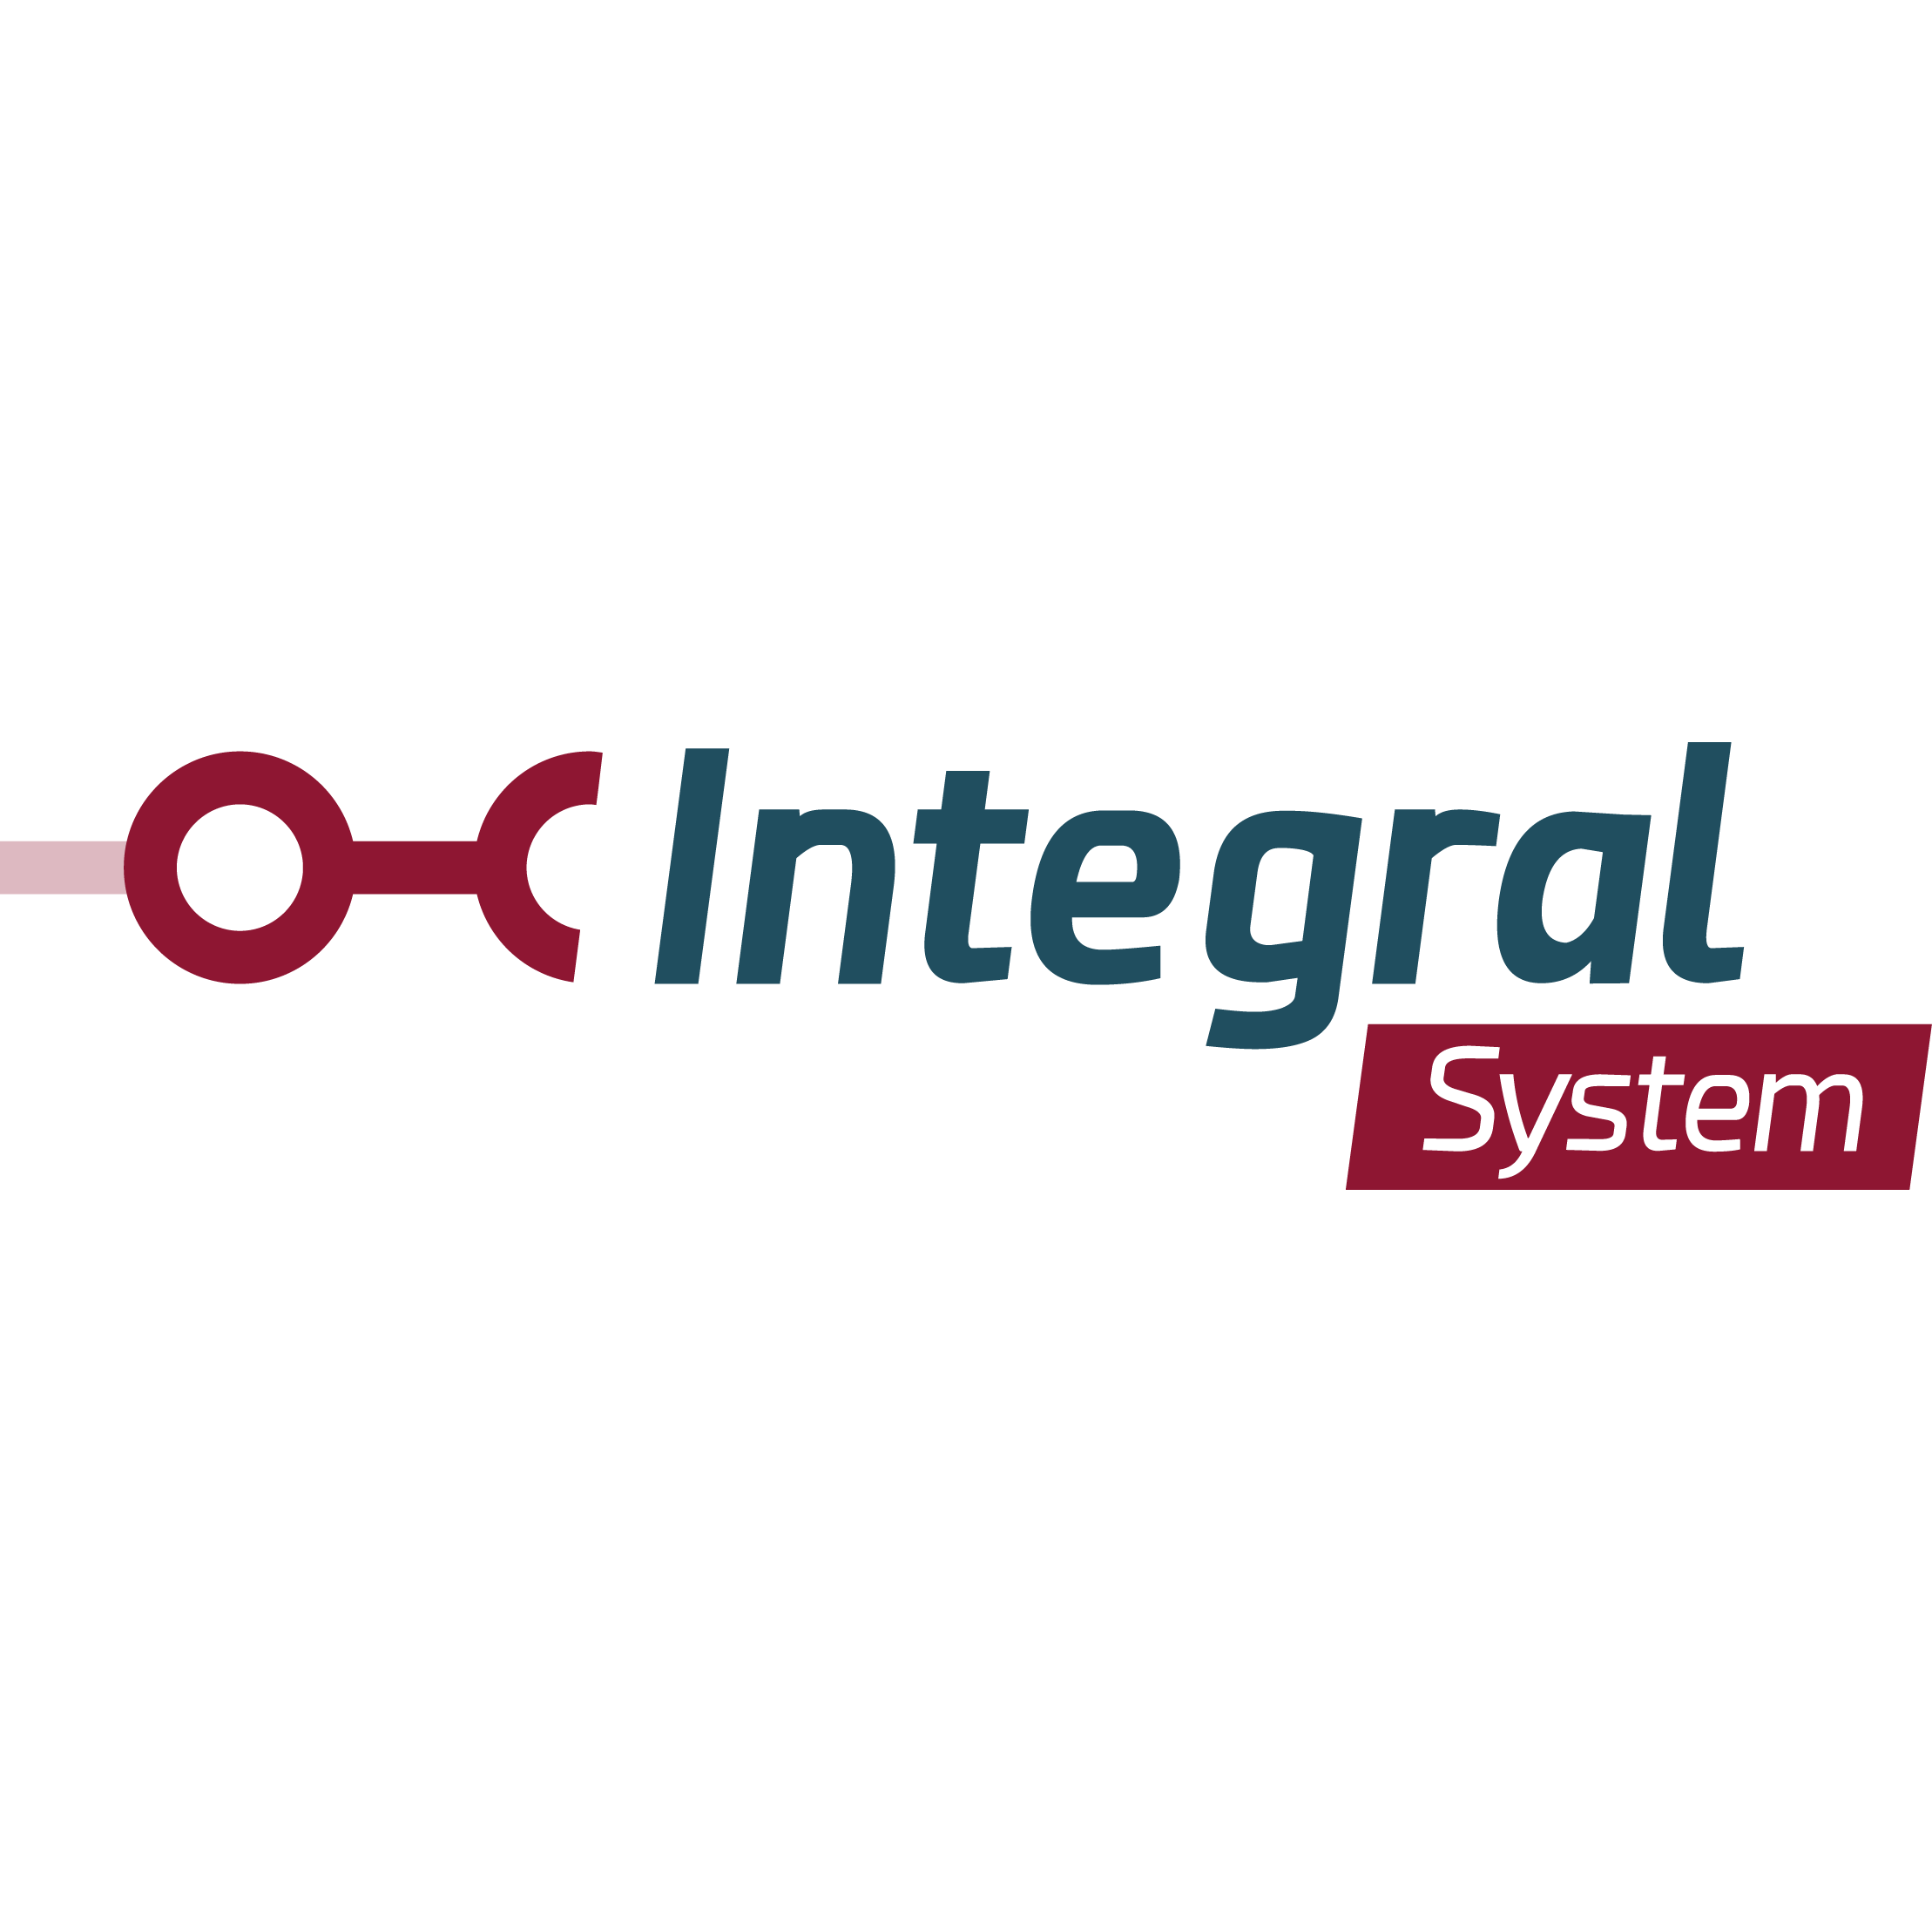 Integrity systems. Integral Systems. Integral System yeasts Plus. Grafos.